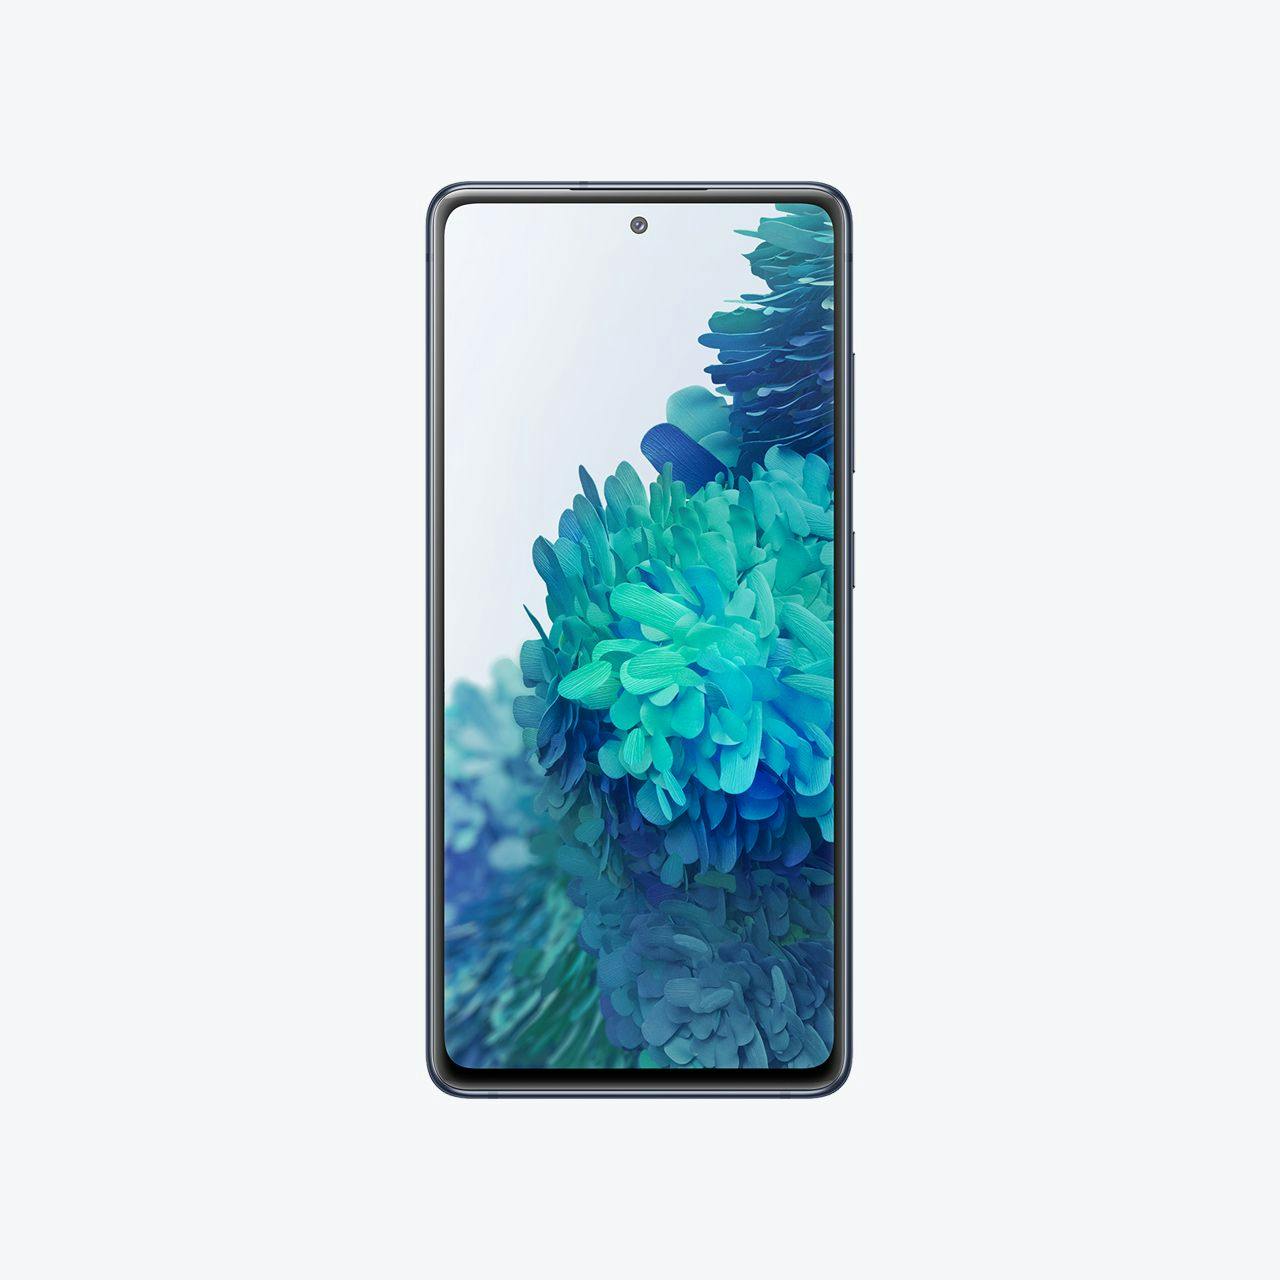 Image of a Samsung Galaxy S20 FE.